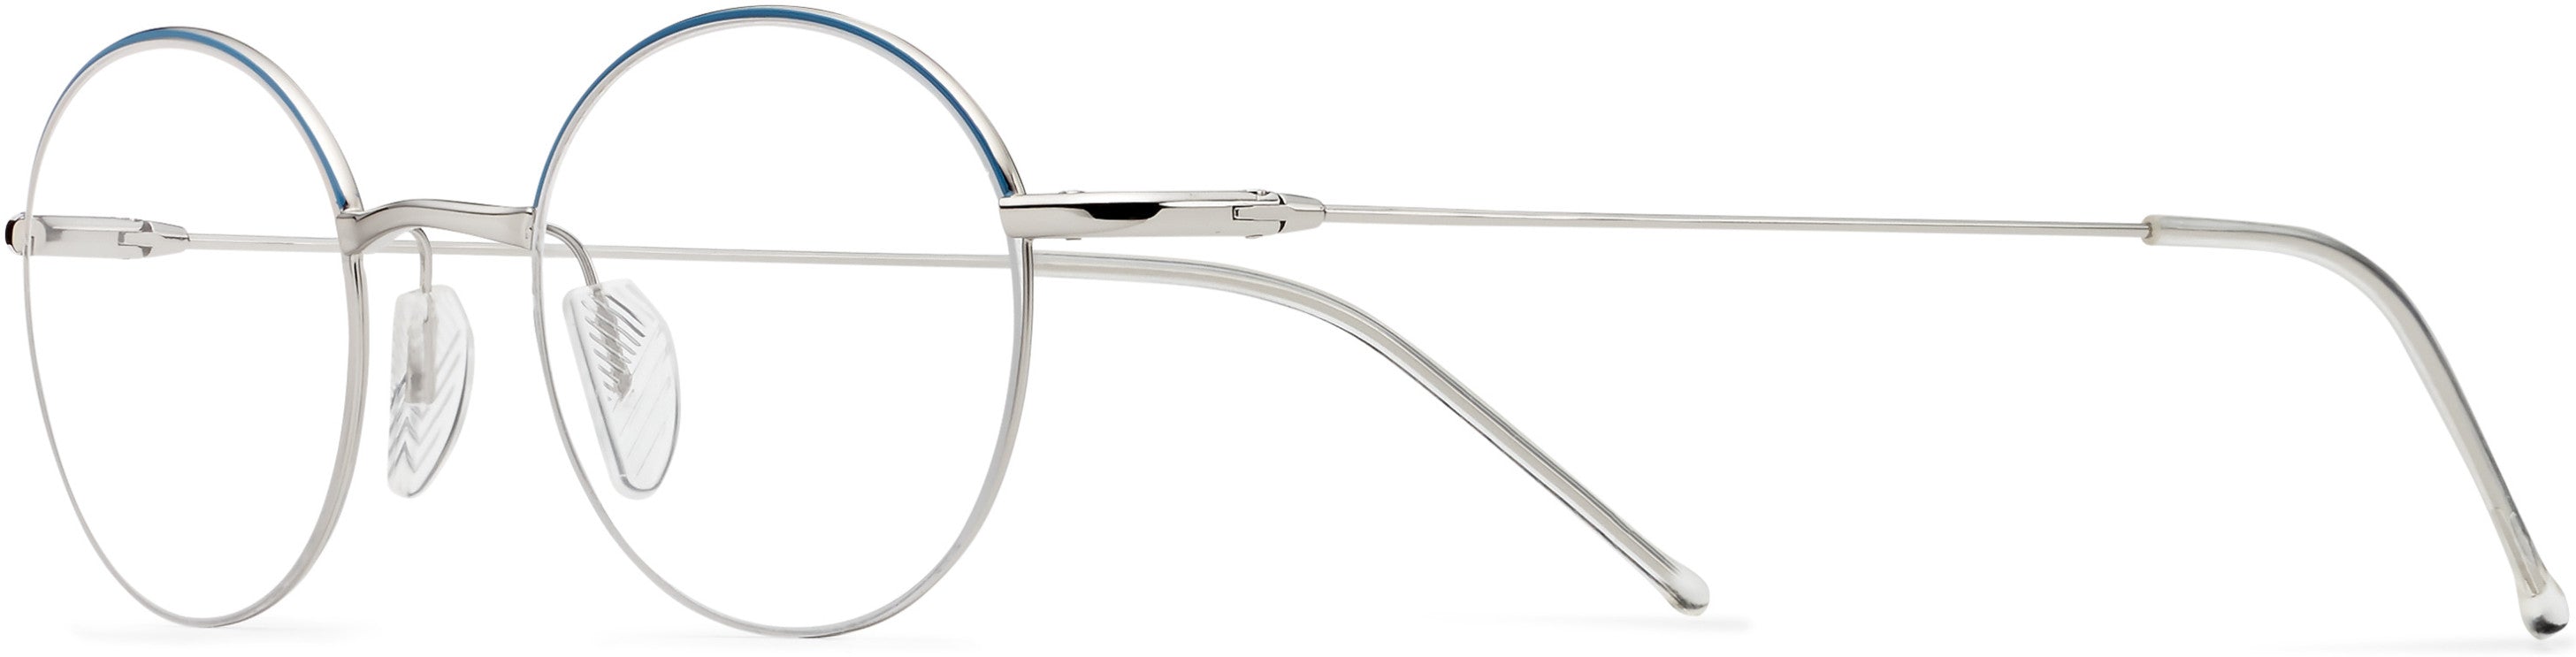 Safilo 2.0 Linea 04 Oval Modified Eyeglasses 0010-0010  Palladium (00 Demo Lens)